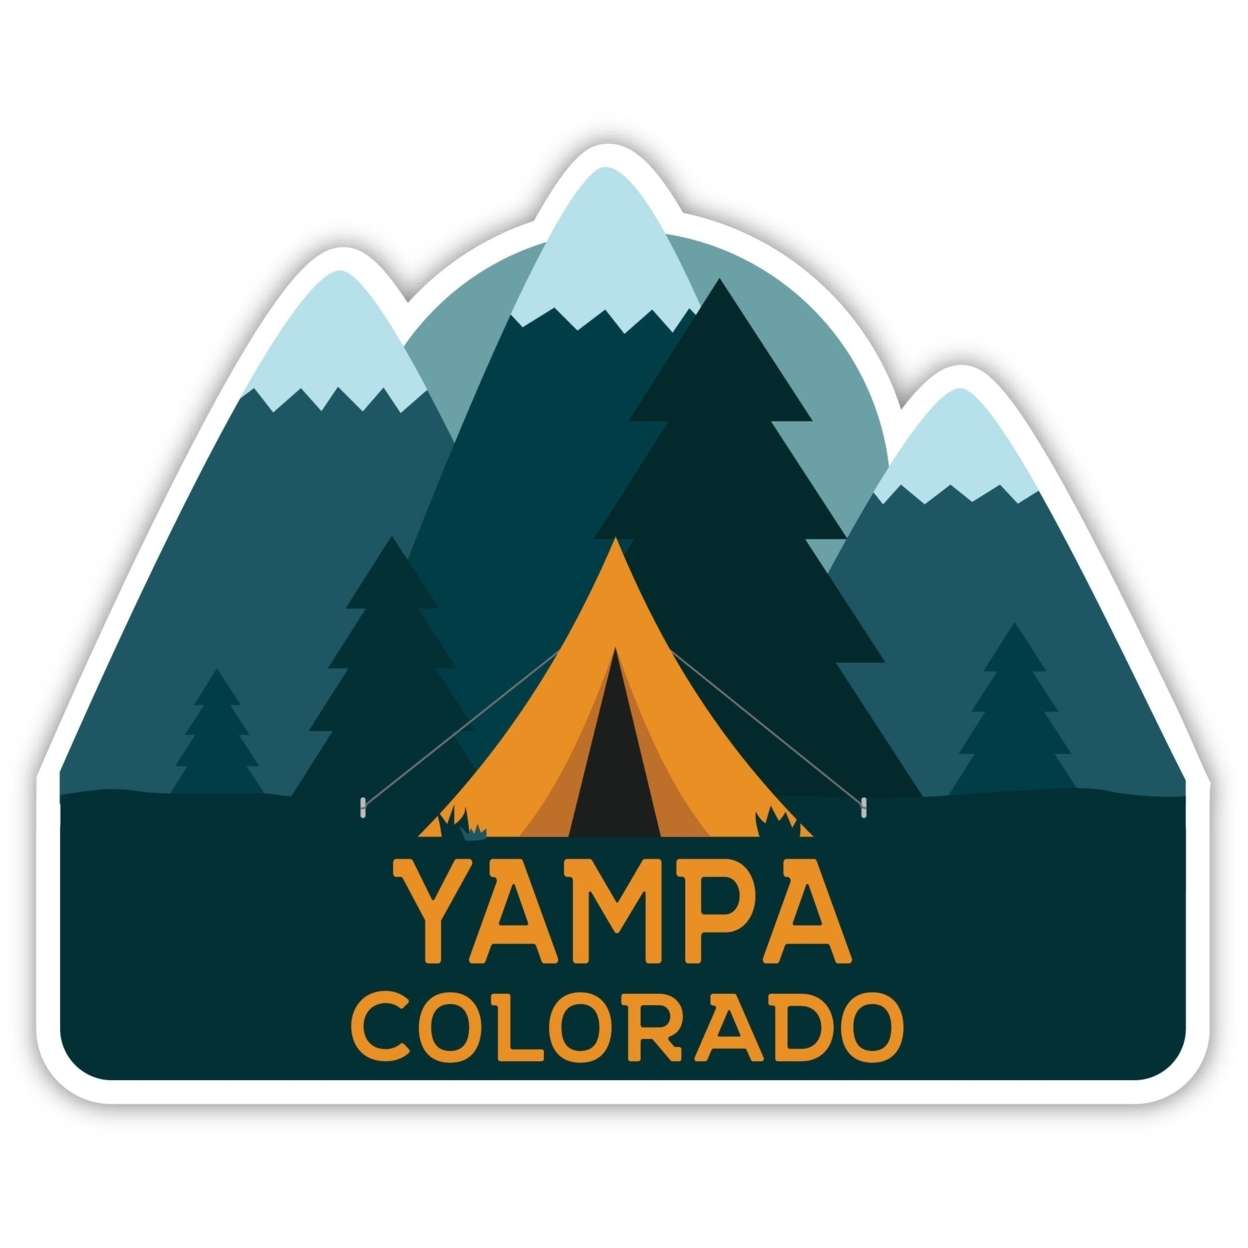 Yampa Colorado Souvenir Decorative Stickers (Choose Theme And Size) - Single Unit, 2-Inch, Camp Life